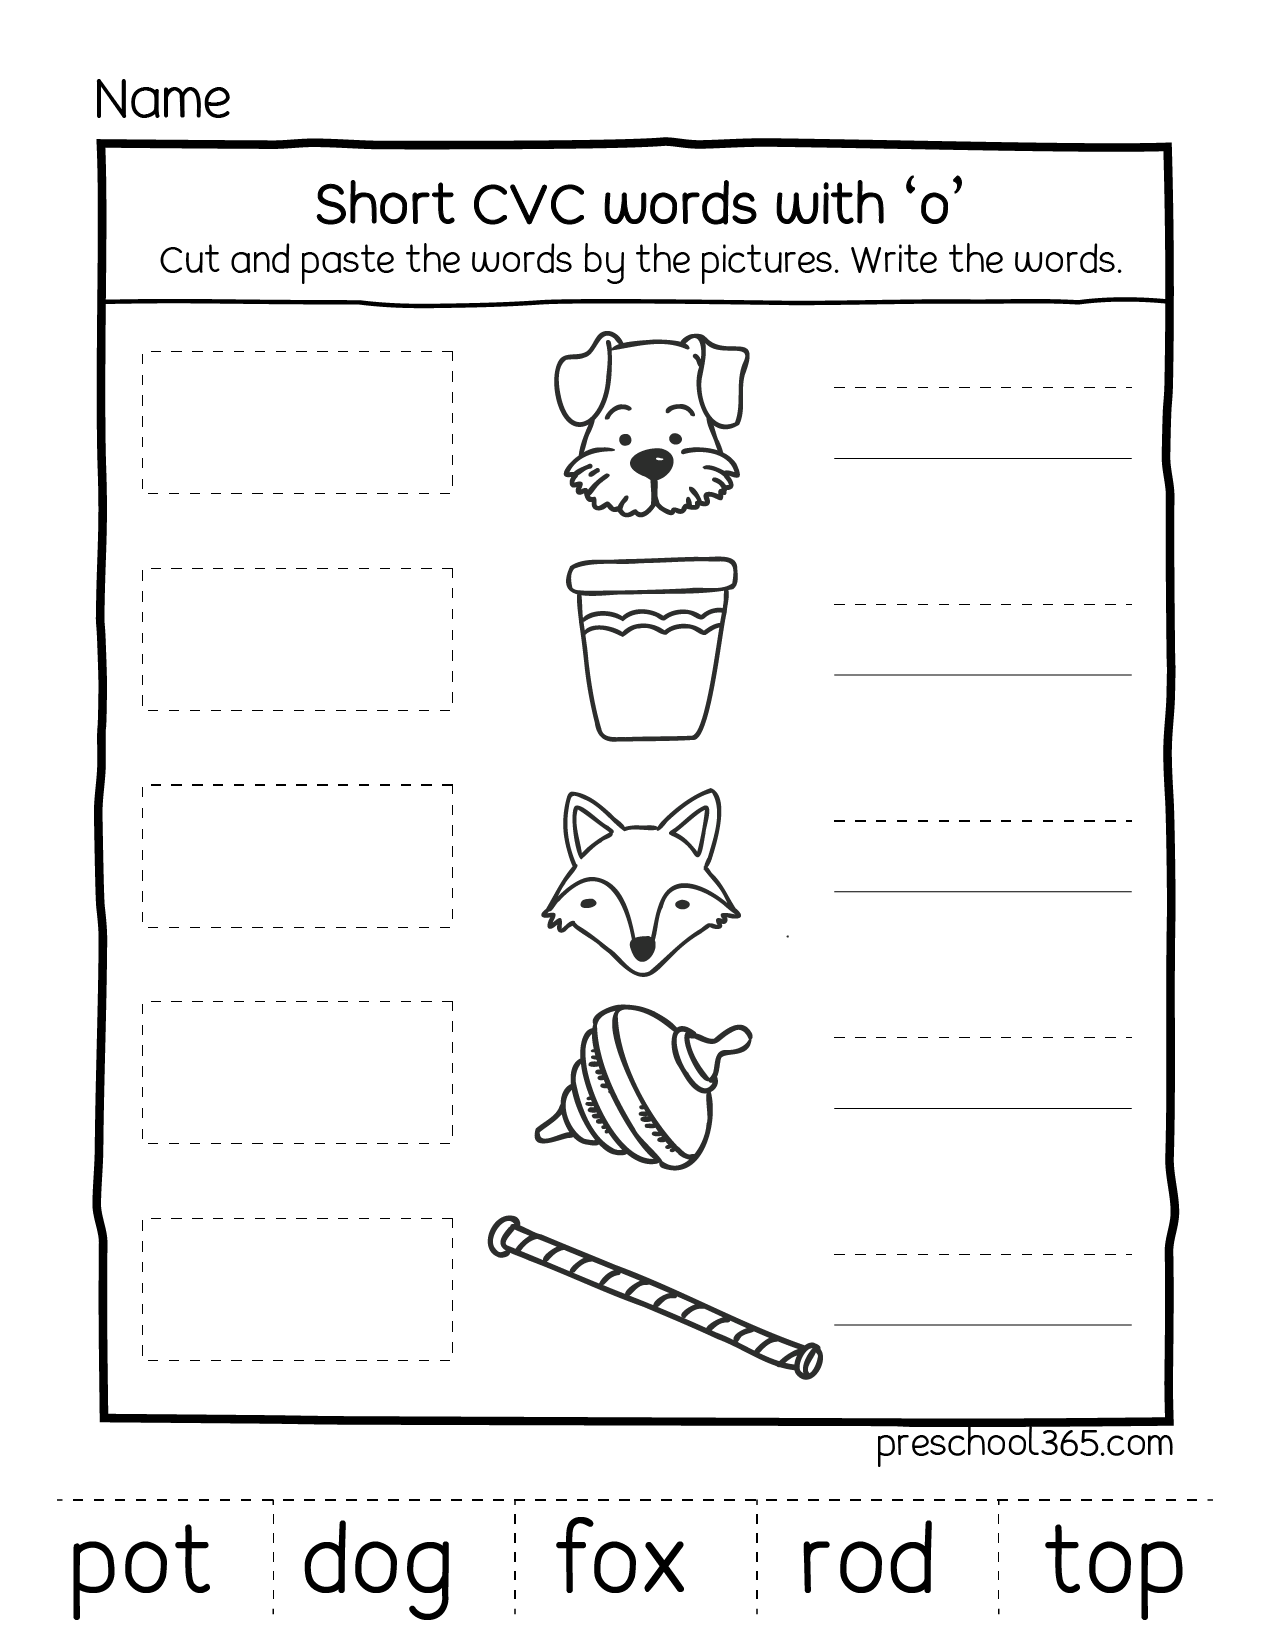 Short cvc words with letter o for pre-k kids